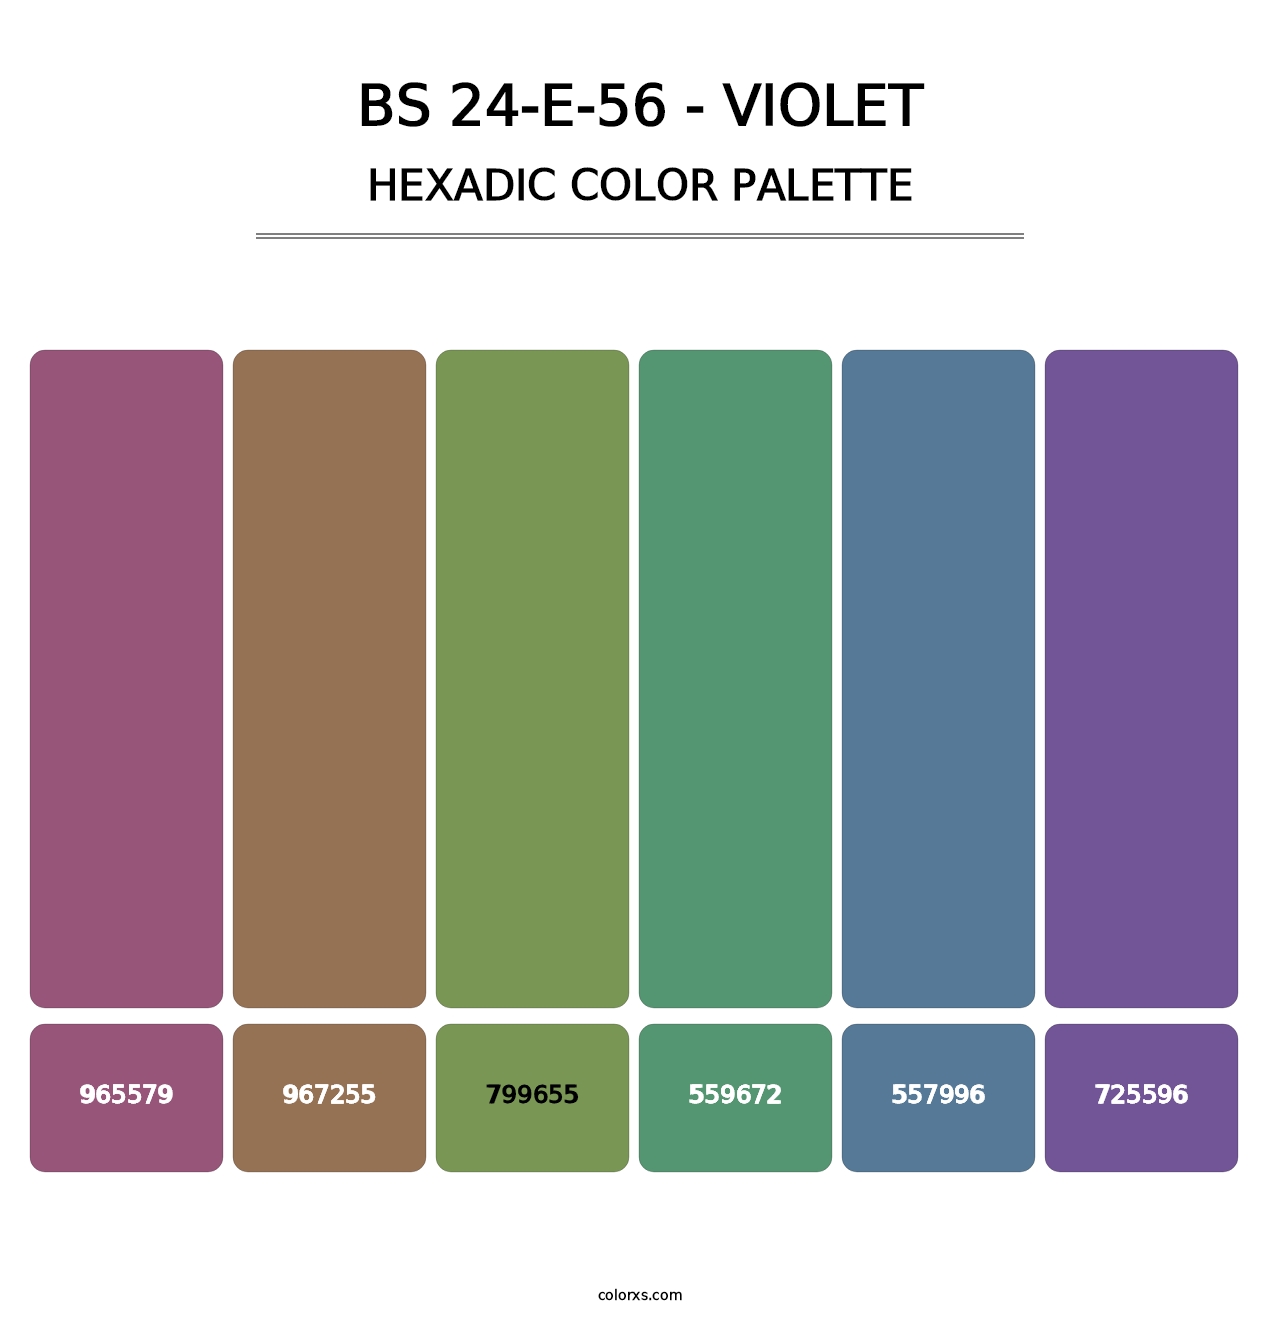 BS 24-E-56 - Violet - Hexadic Color Palette